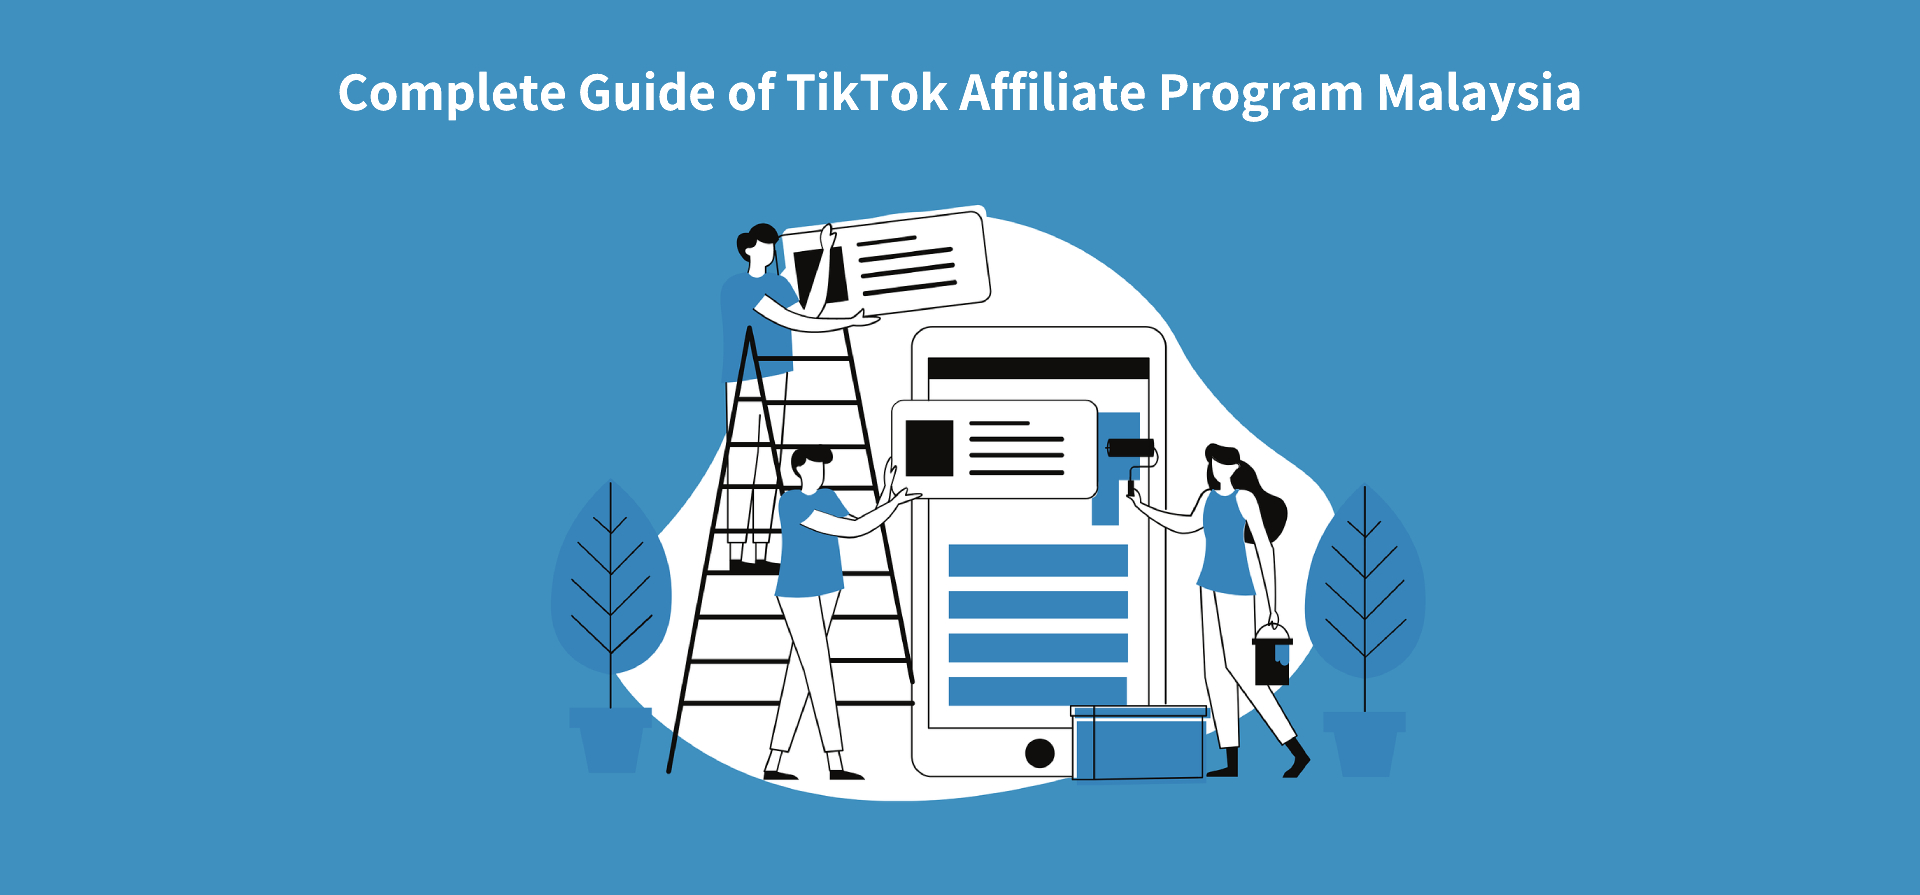 Complete Guide of TikTok Affiliate Program Malaysia